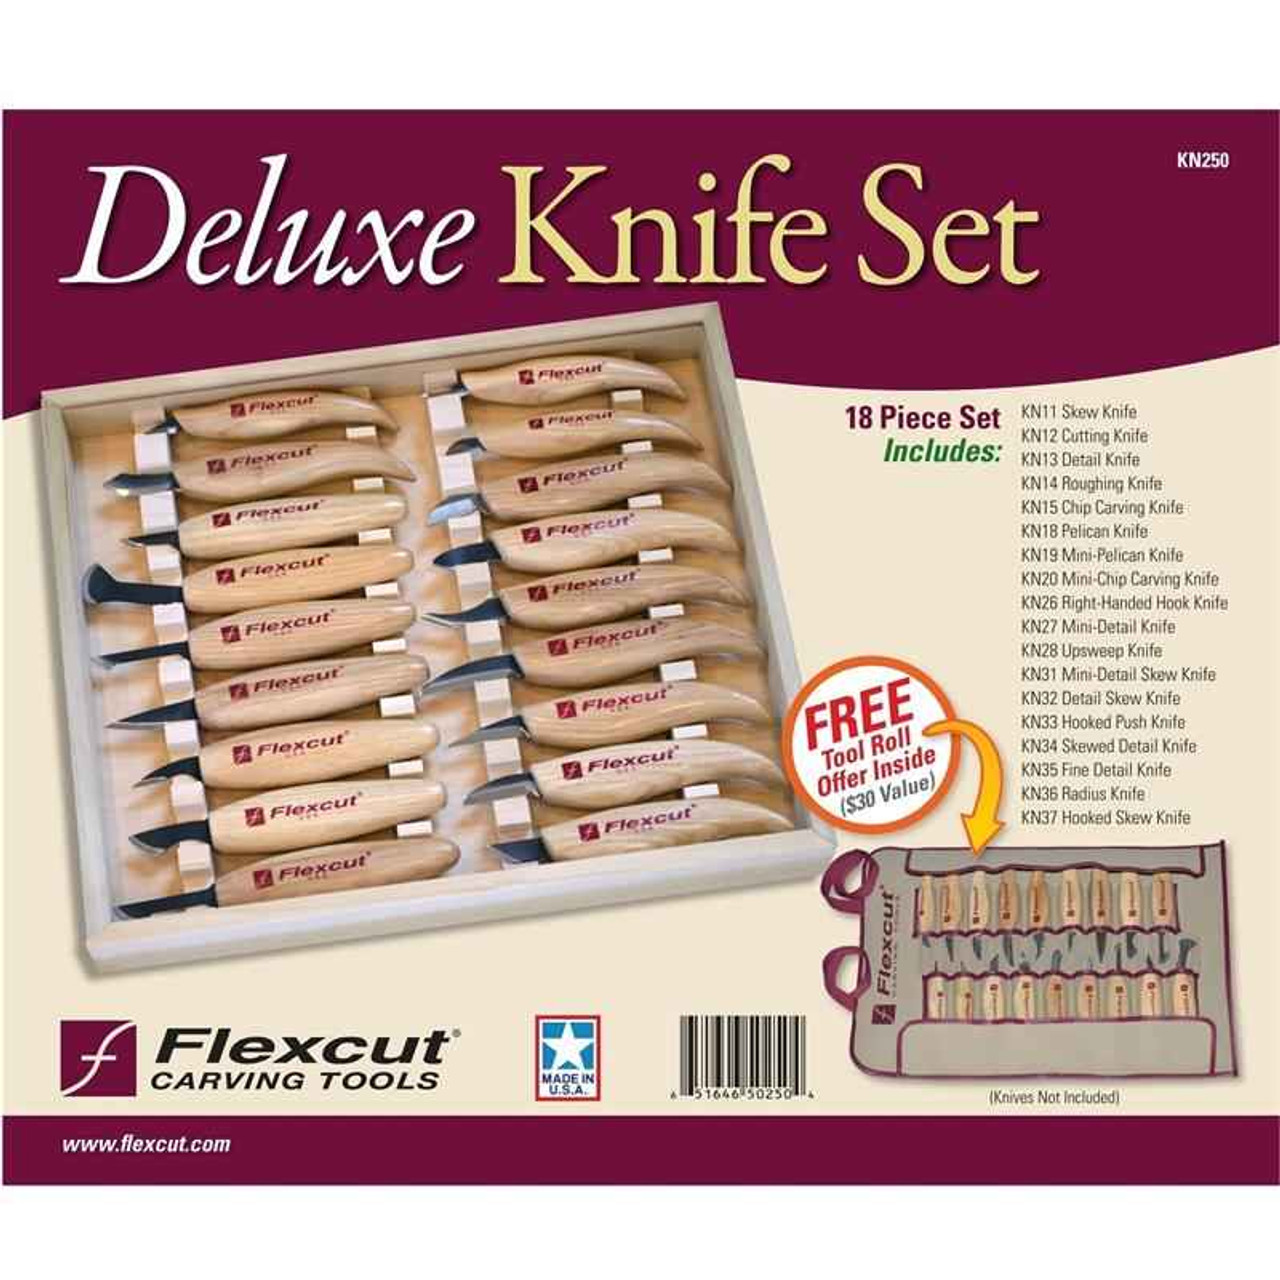 Flexcut KN250 Deluxe Knife Set